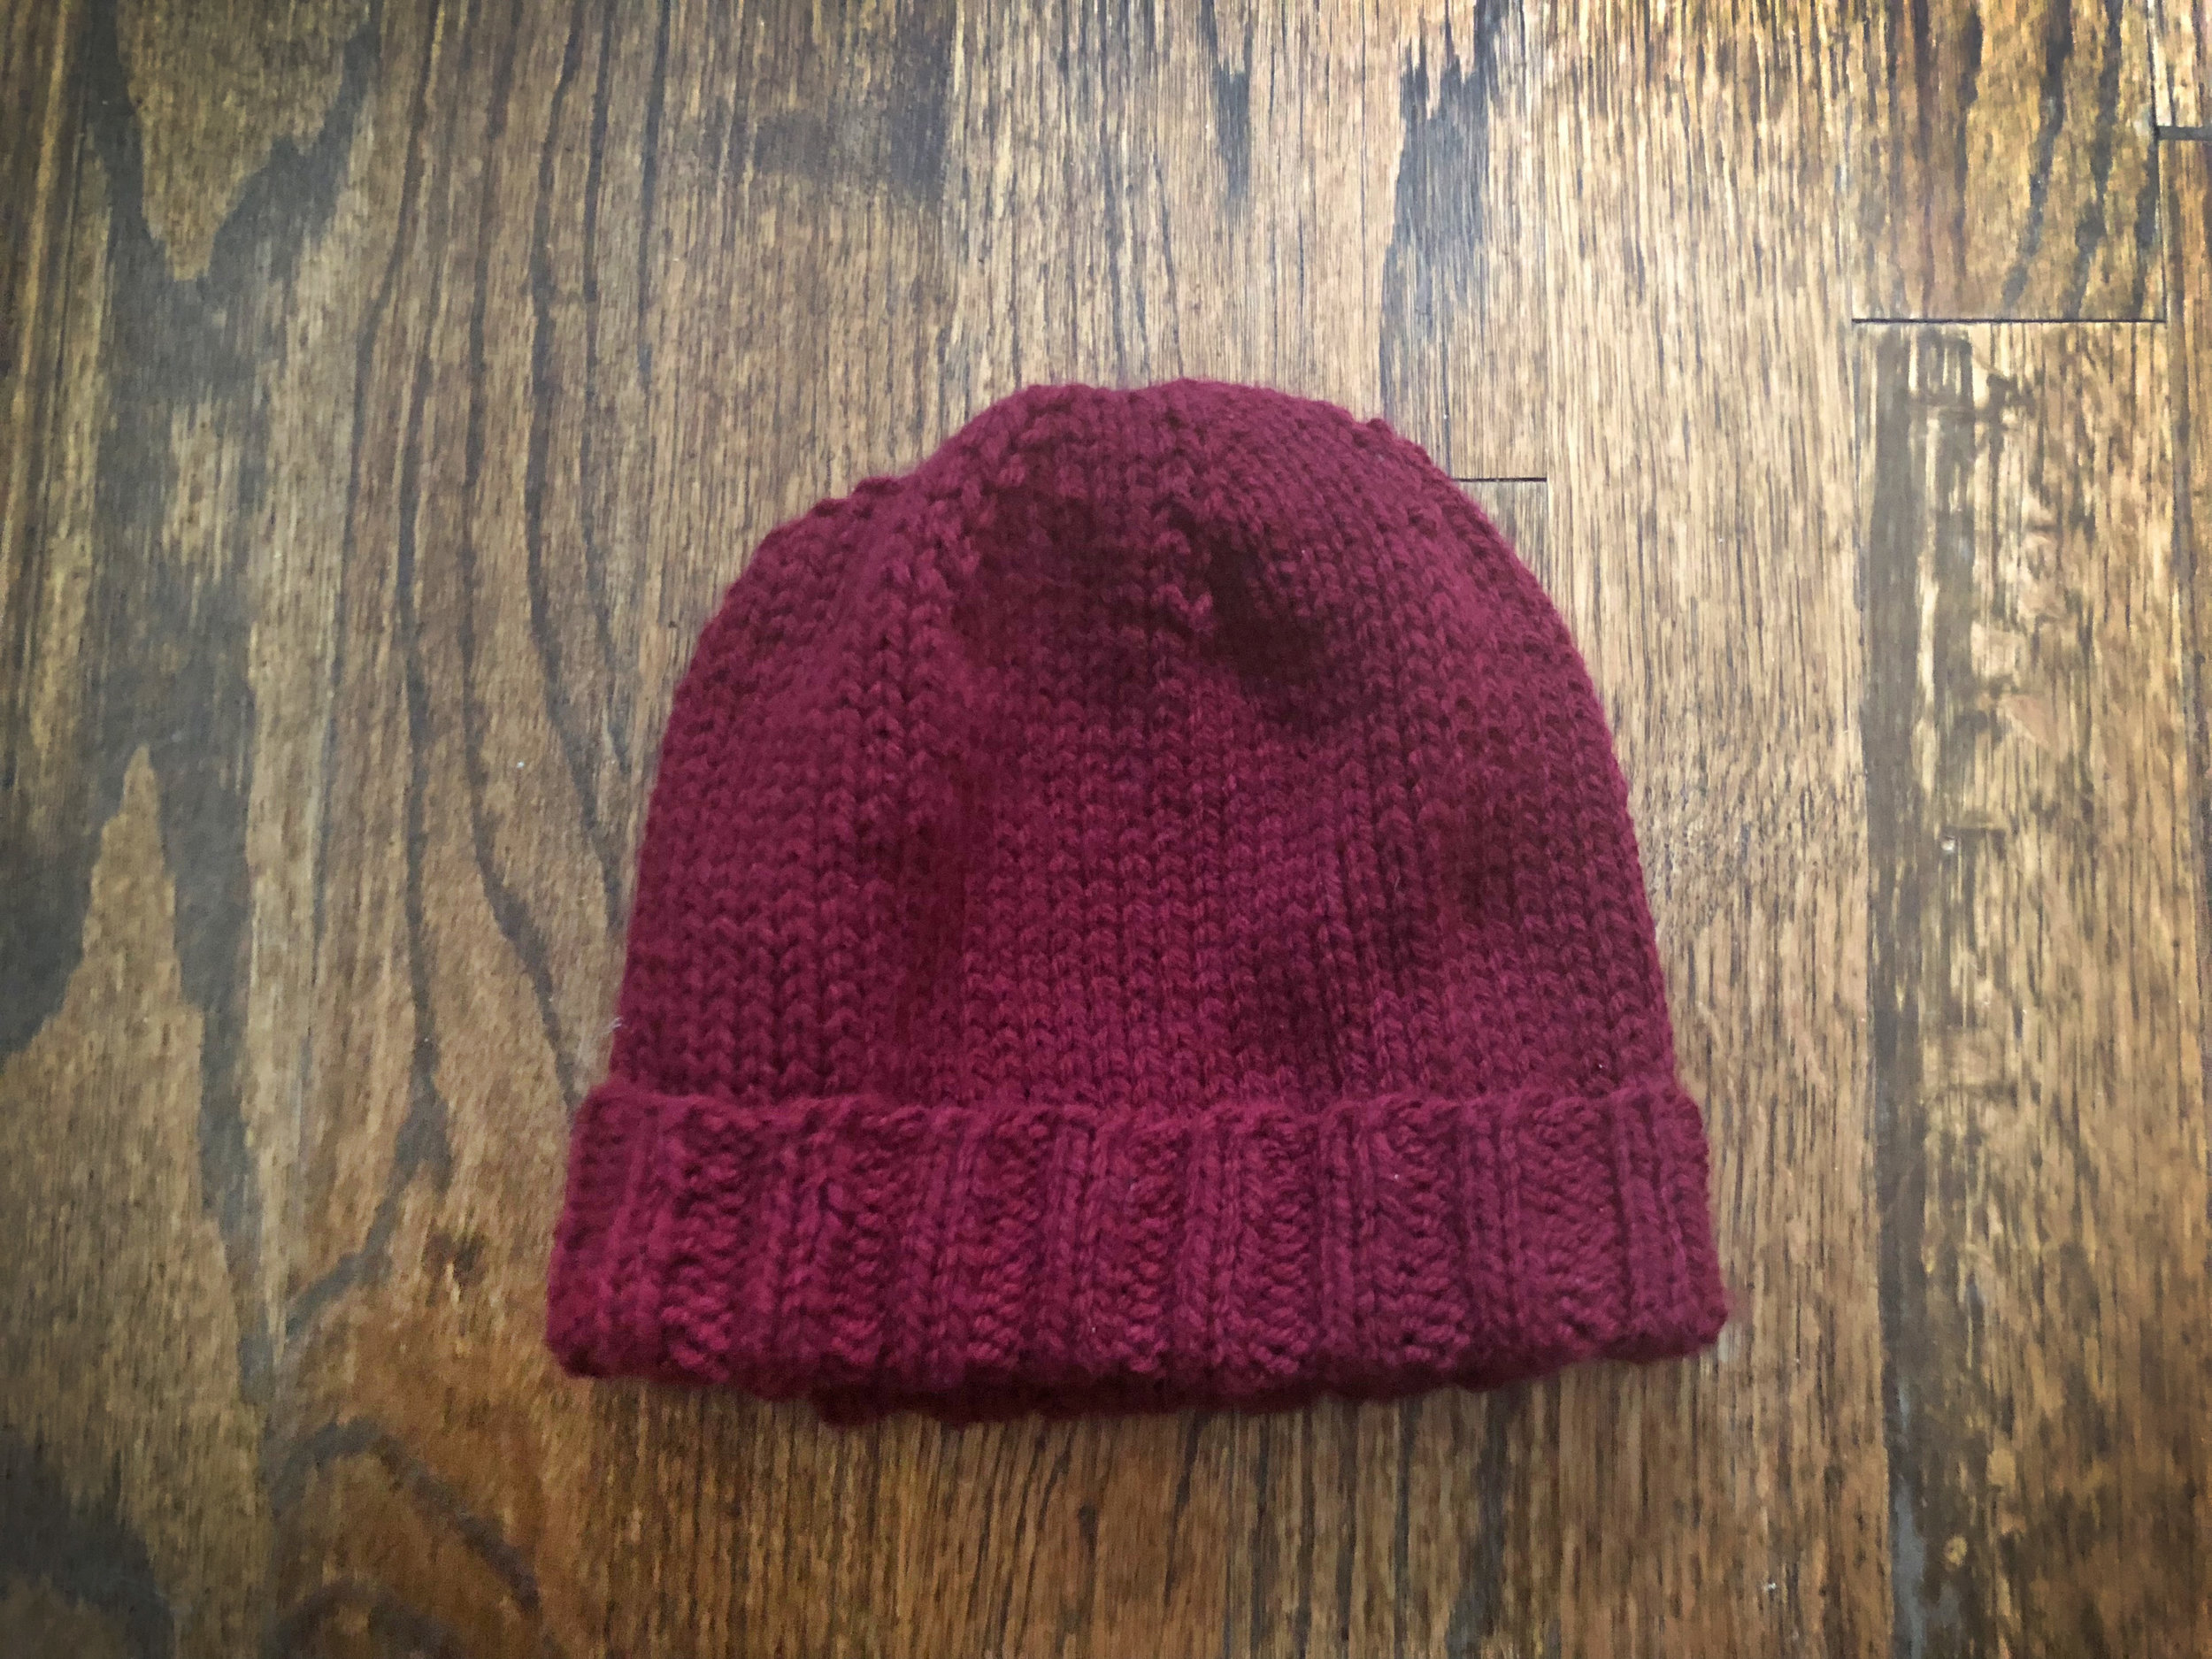 Knitting 101 – Hats: Decreasing the Crown